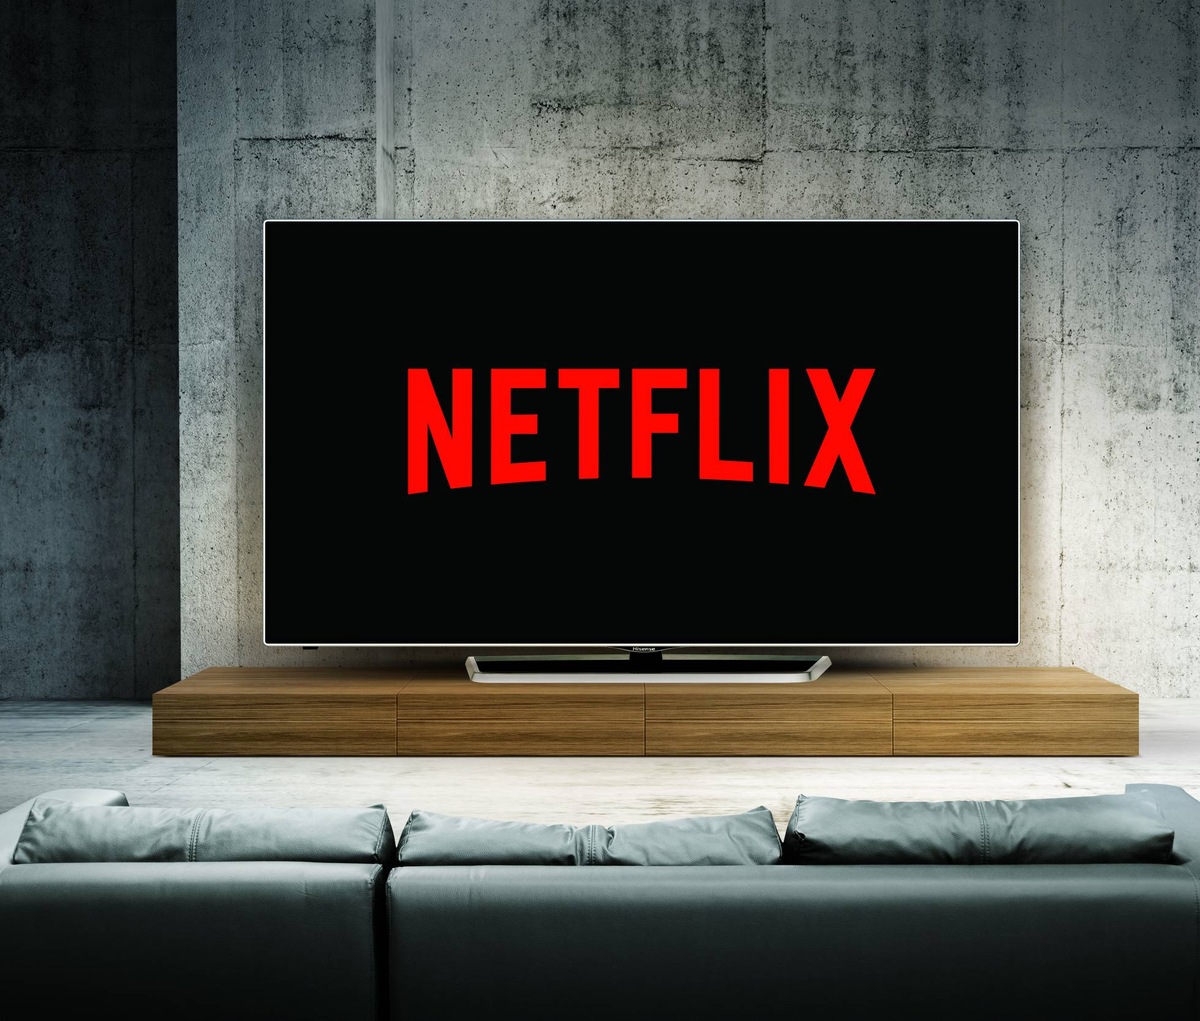 How Do I Cancel Netflix On My Television?